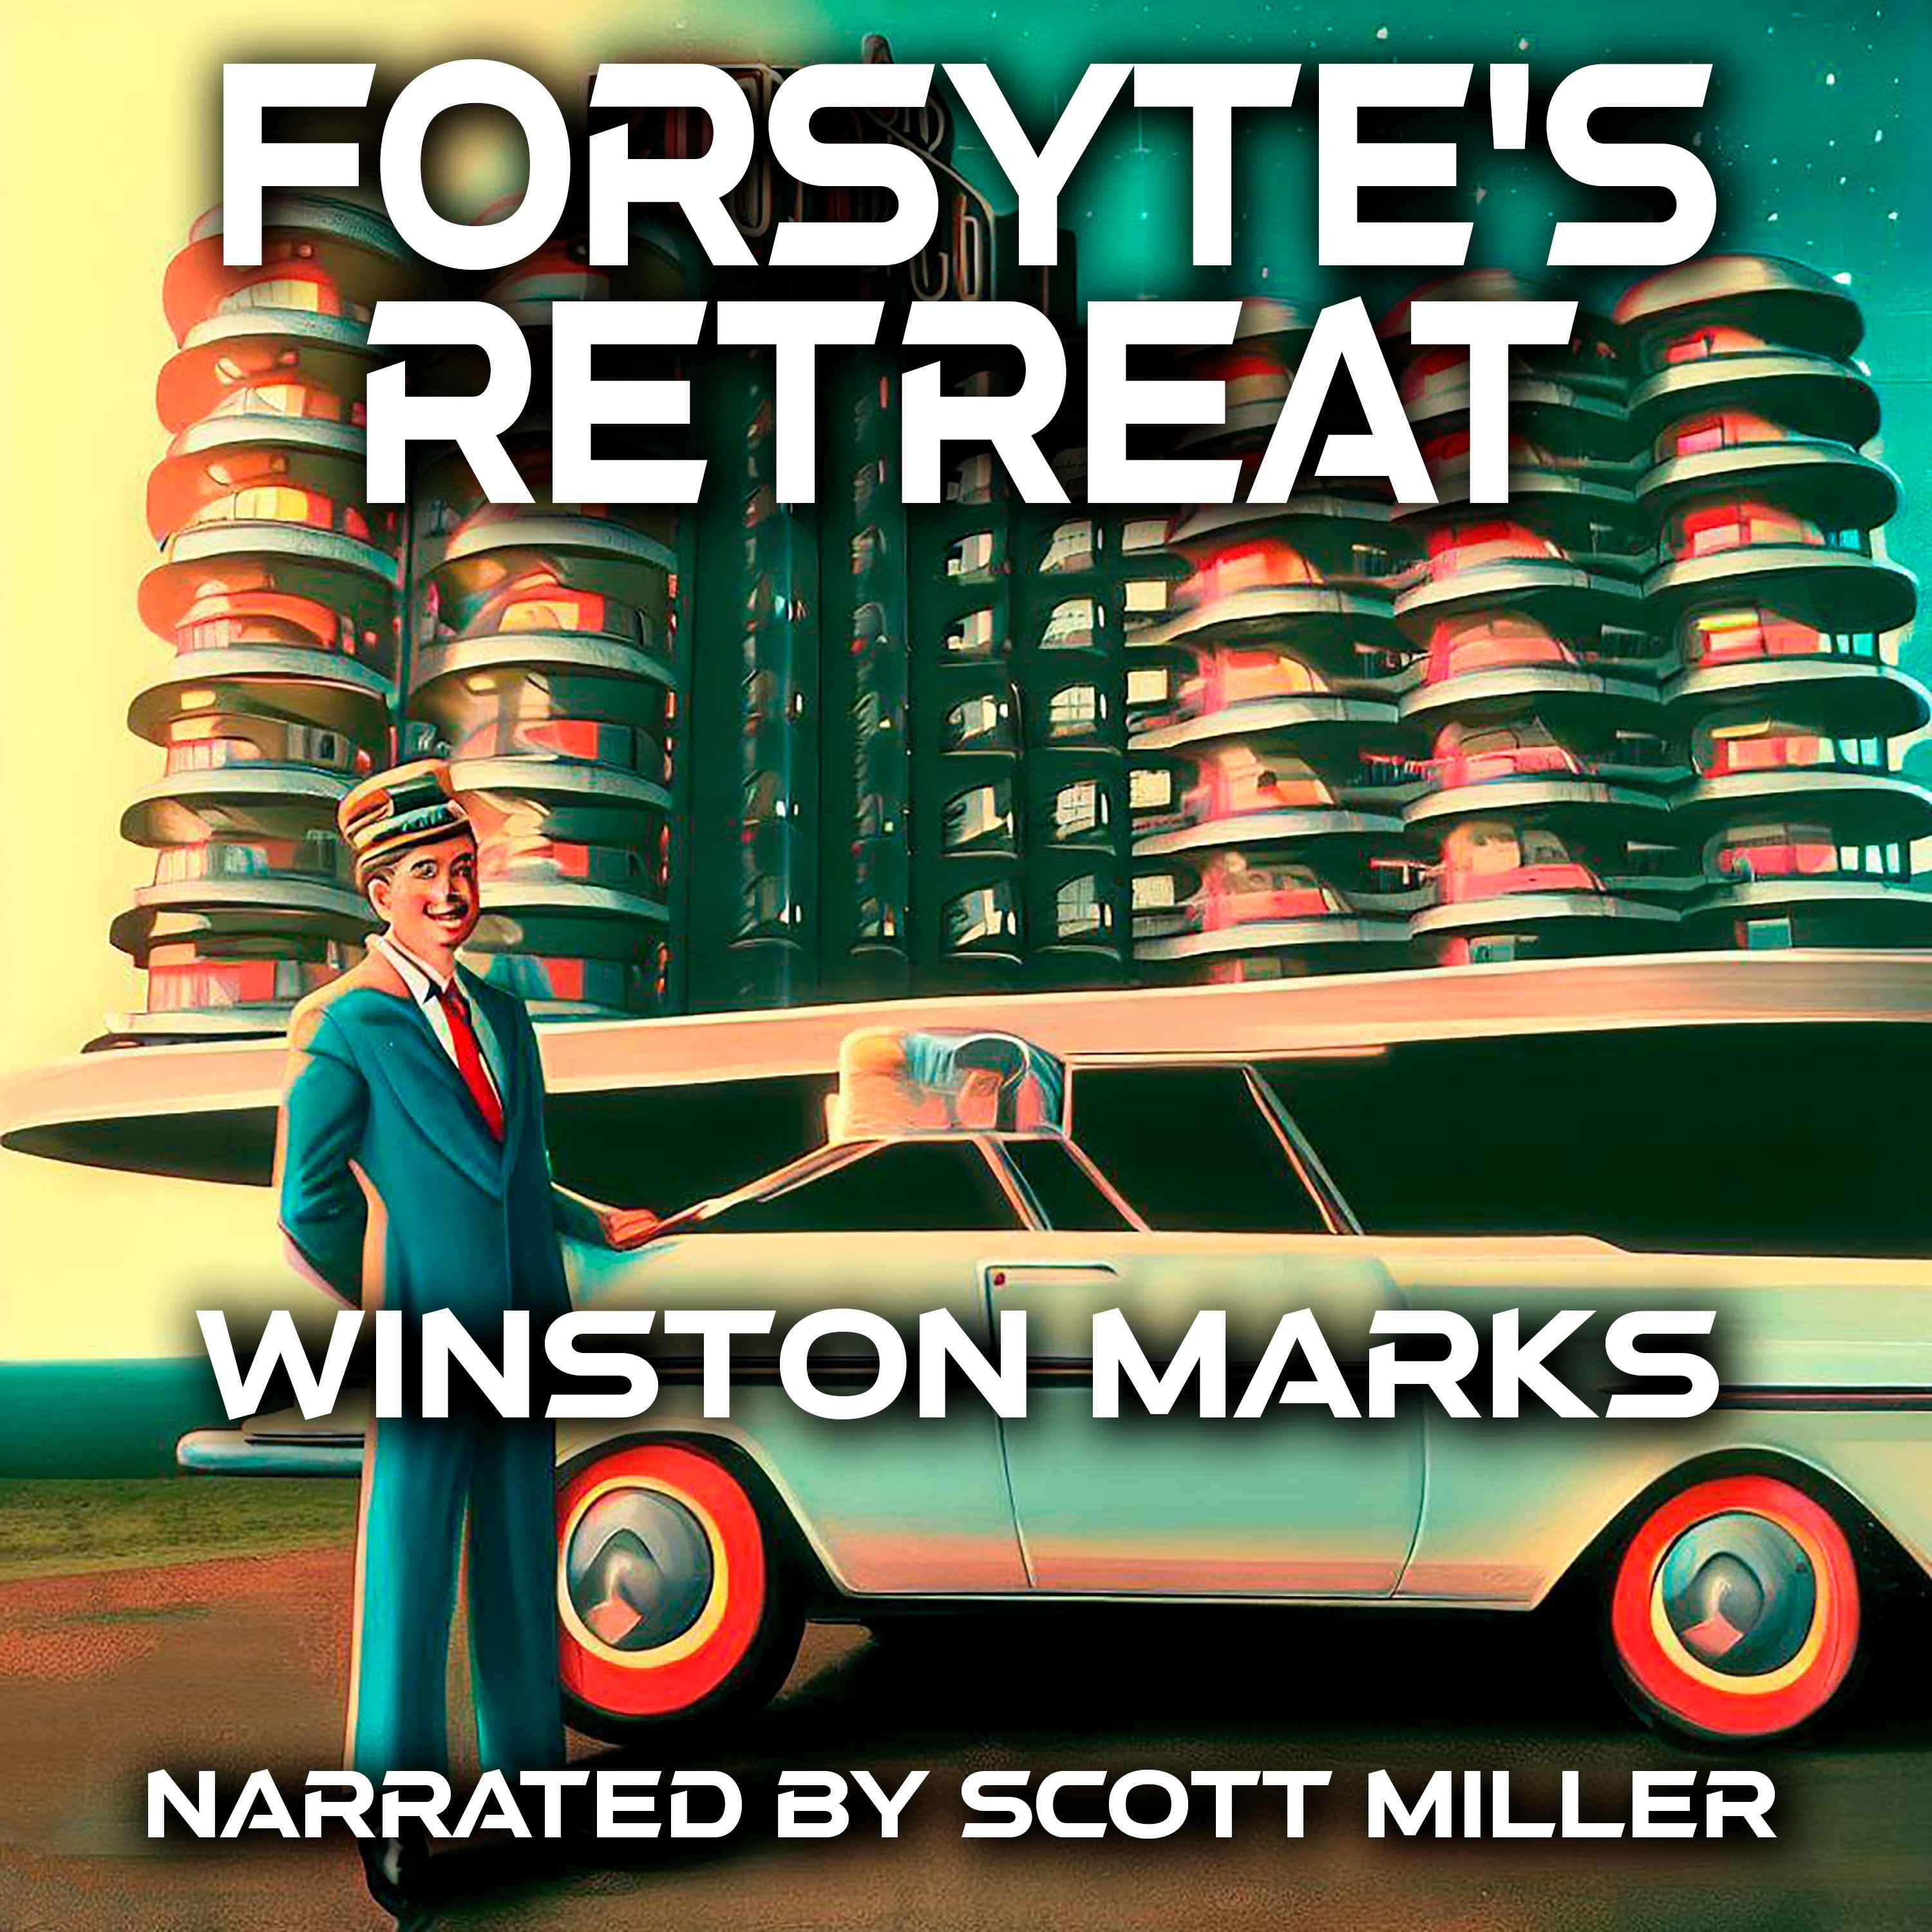 Forsyte’s Retreat by Winston Marks - Sci Fi Short Stories